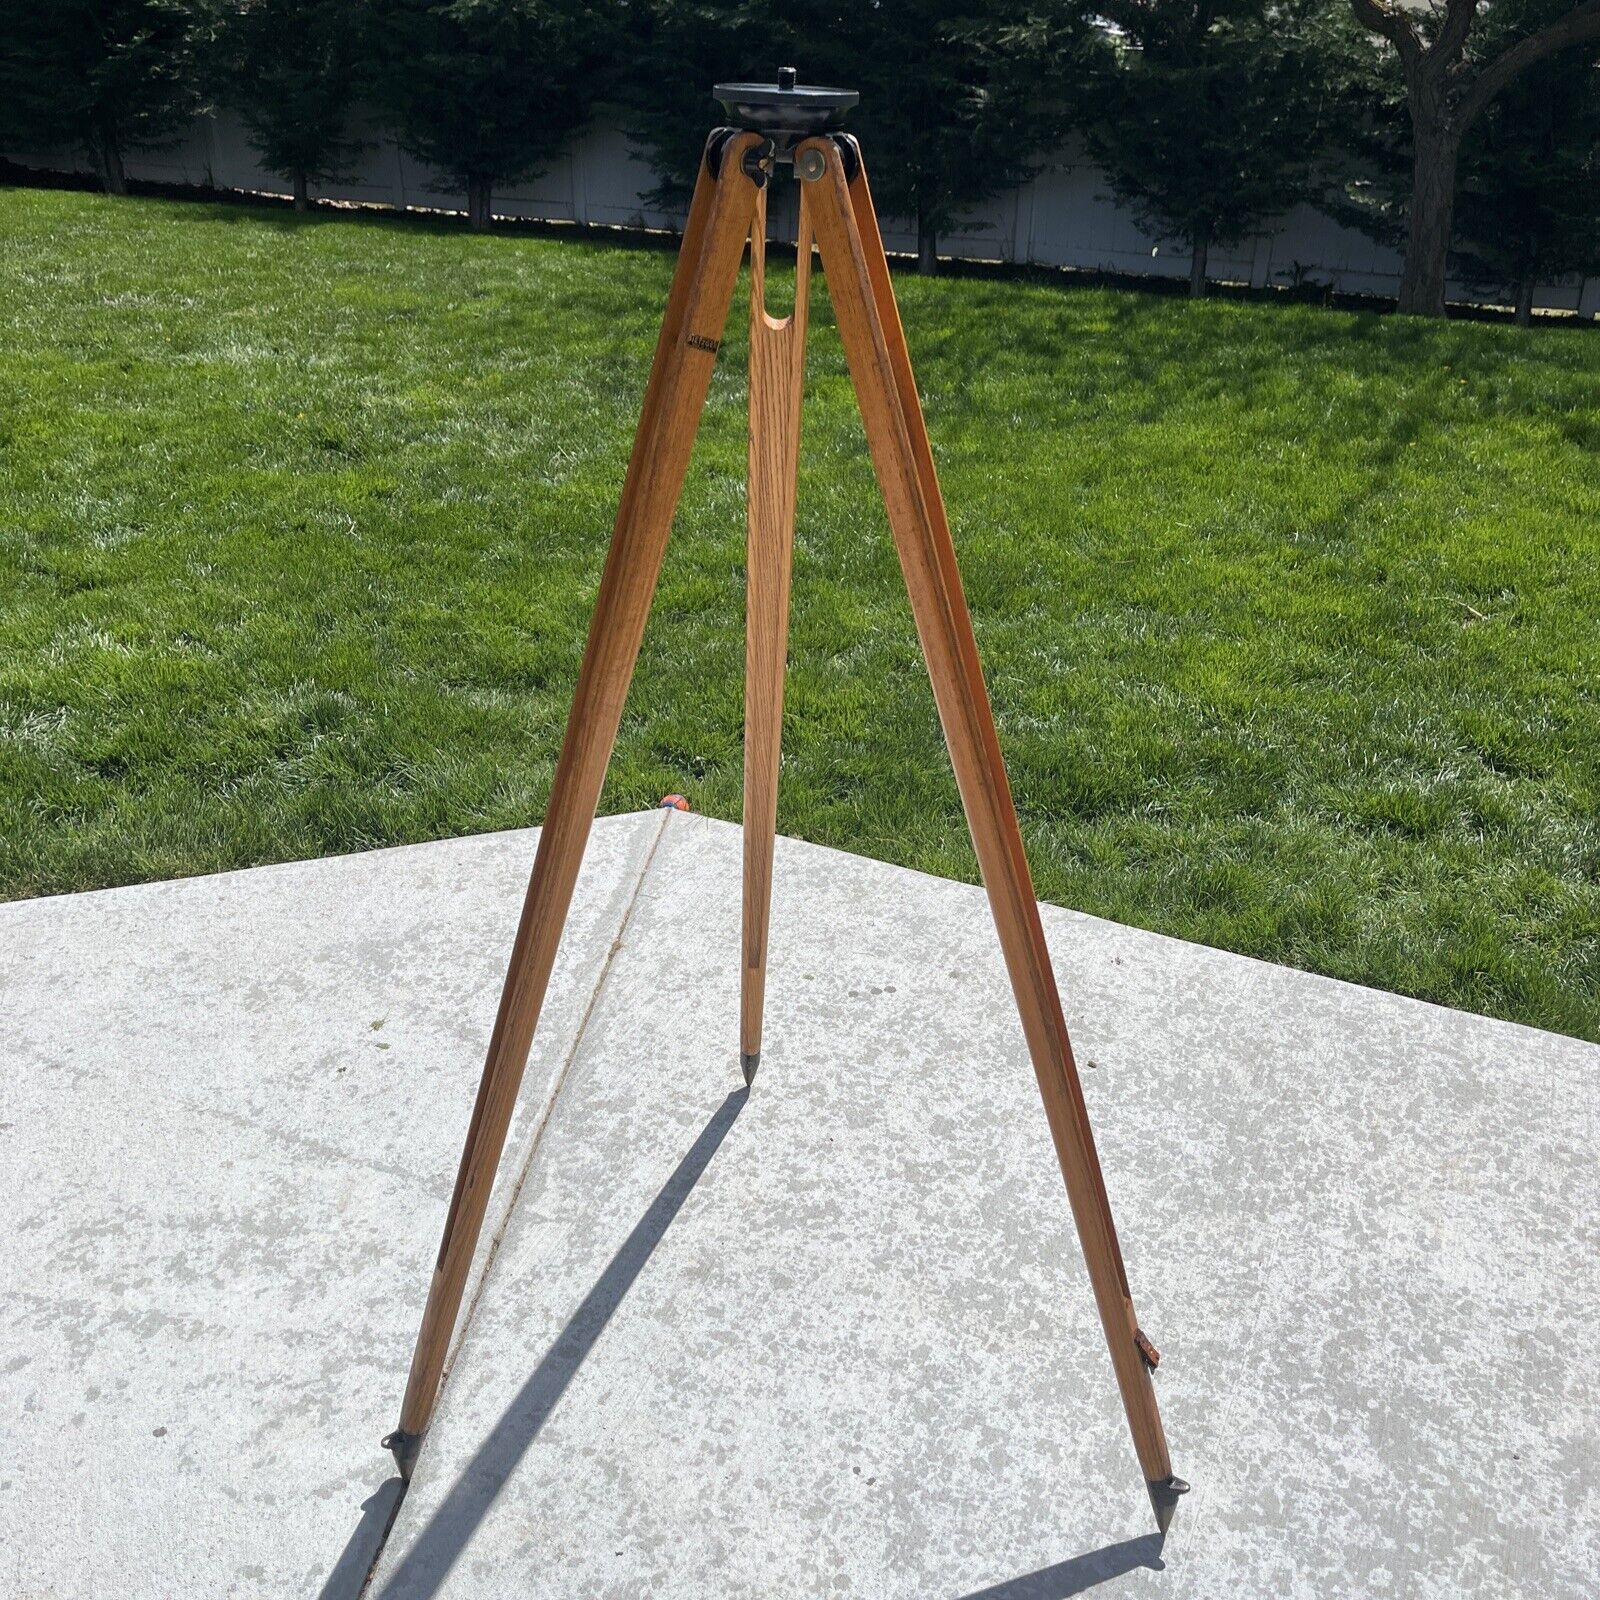 Vintage Dietzgen Wooden Surveying Transit Level Tripod 3 1/2 x 8